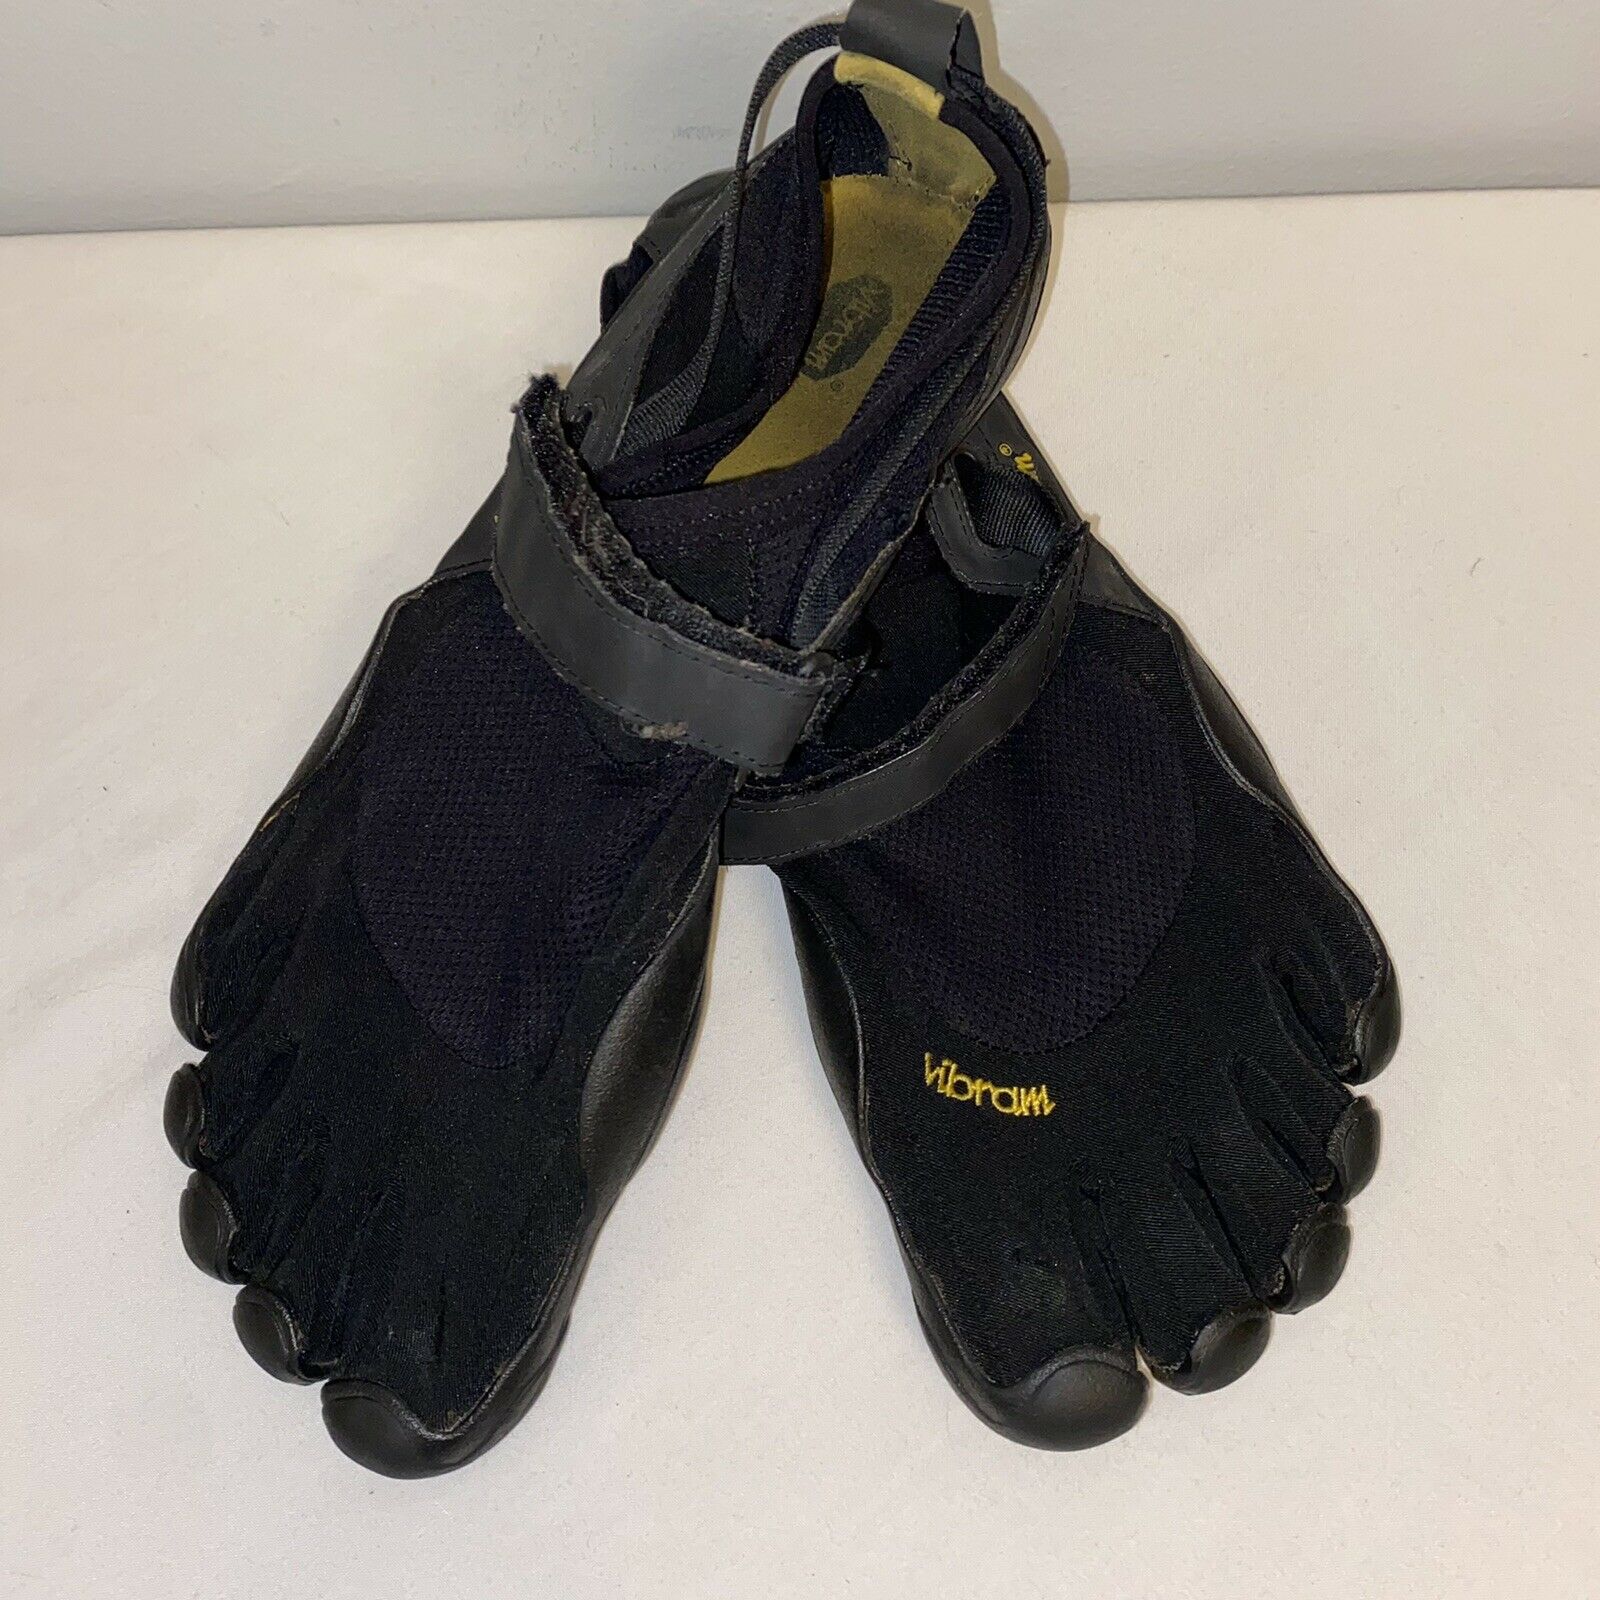 Vibram FiveFingers KSO M148 Black Running Shoes Men's Size 44 US Shoe Size 10